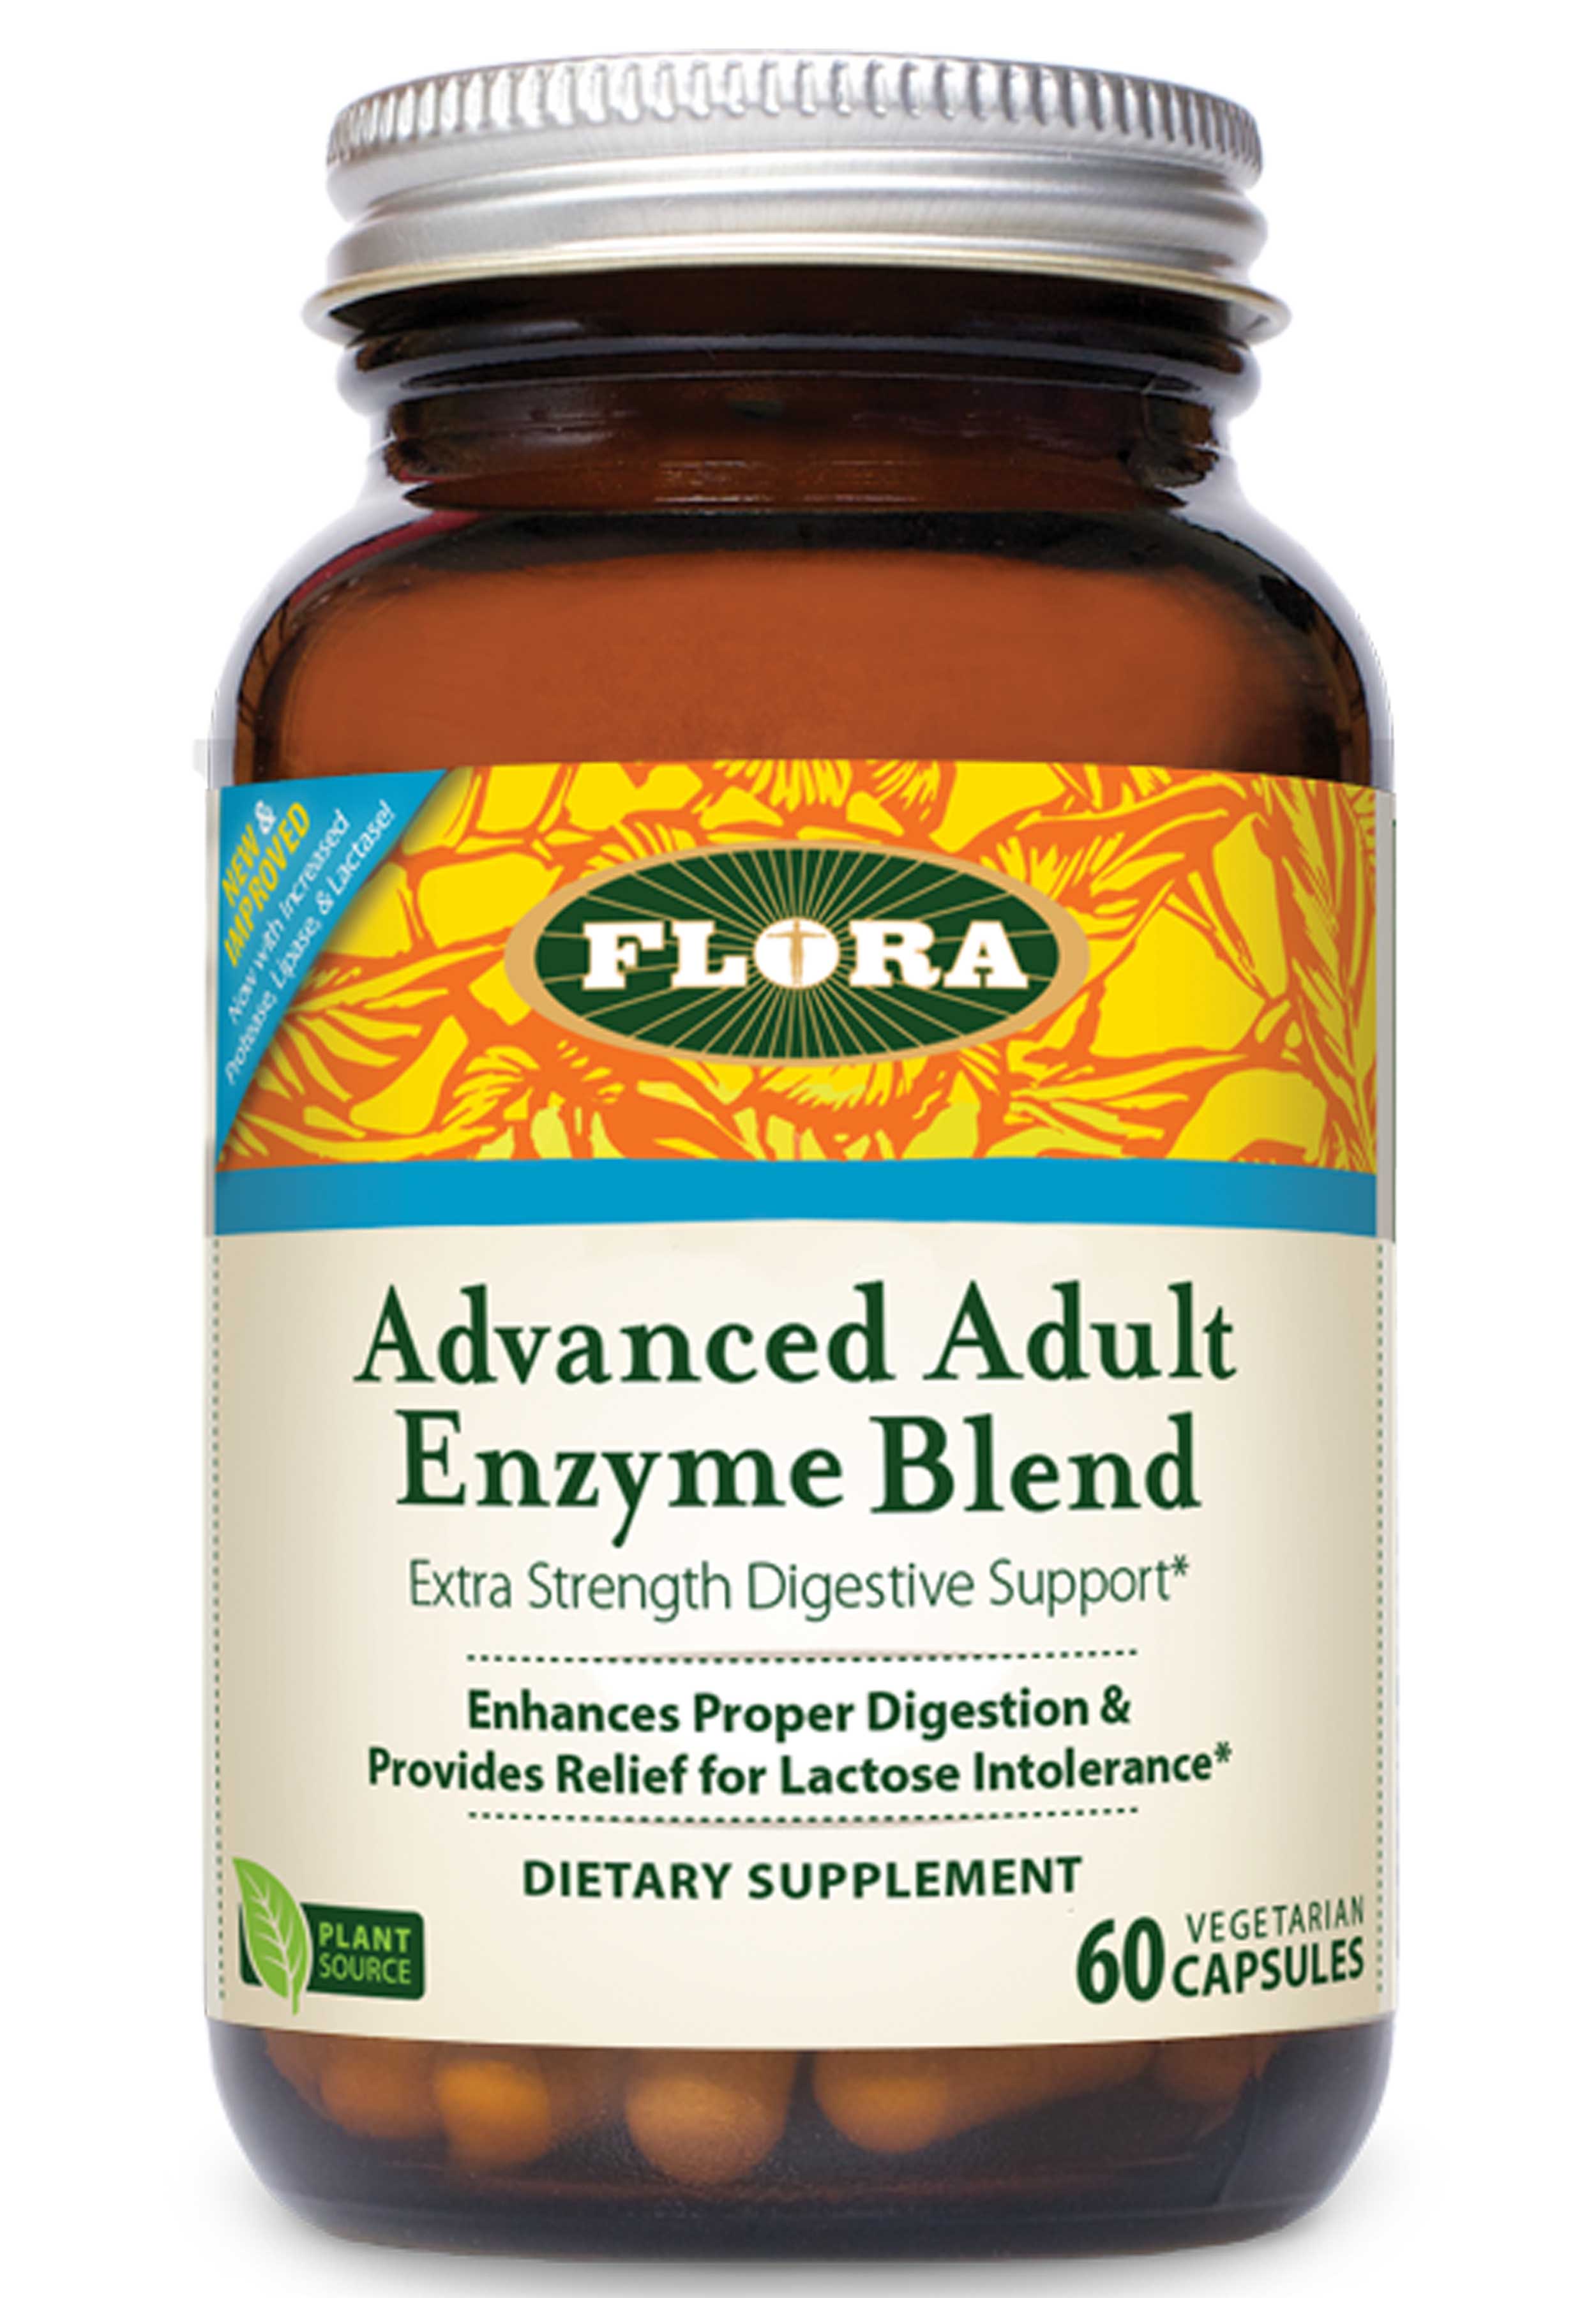 Flora Advanced Adult Enzyme Blend